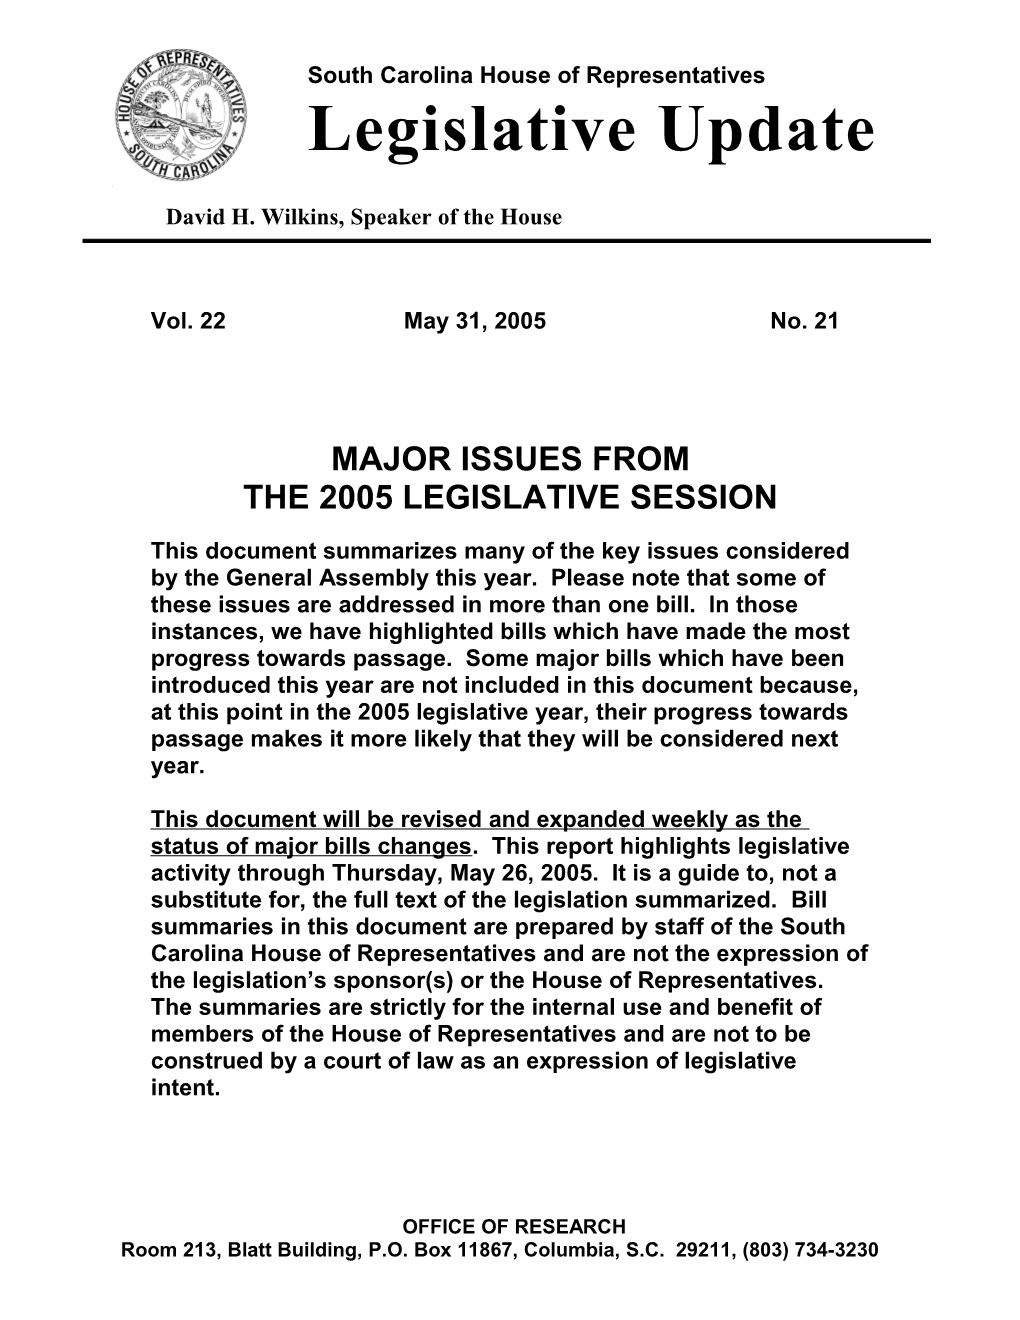 Legislative Update - Vol. 22 No. 21 May 31, 2005 - South Carolina Legislature Online